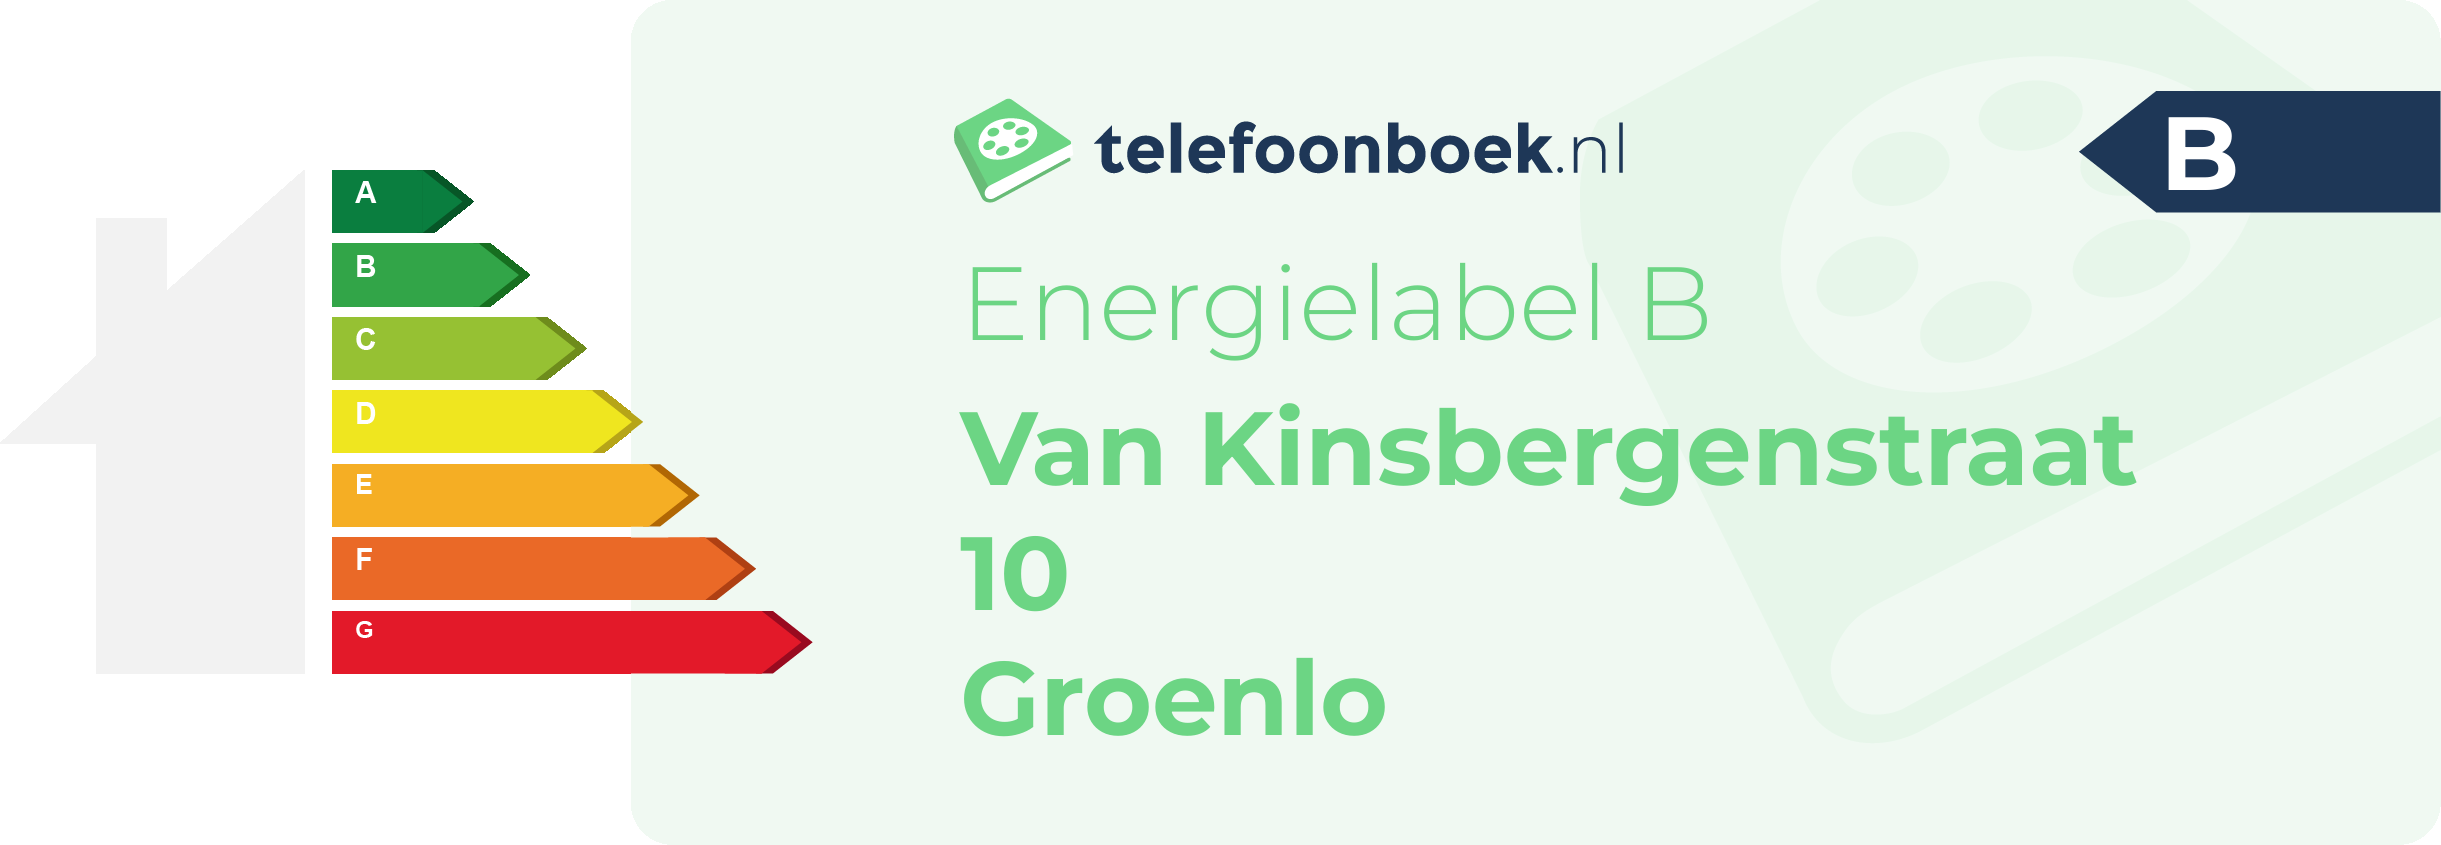 Energielabel Van Kinsbergenstraat 10 Groenlo